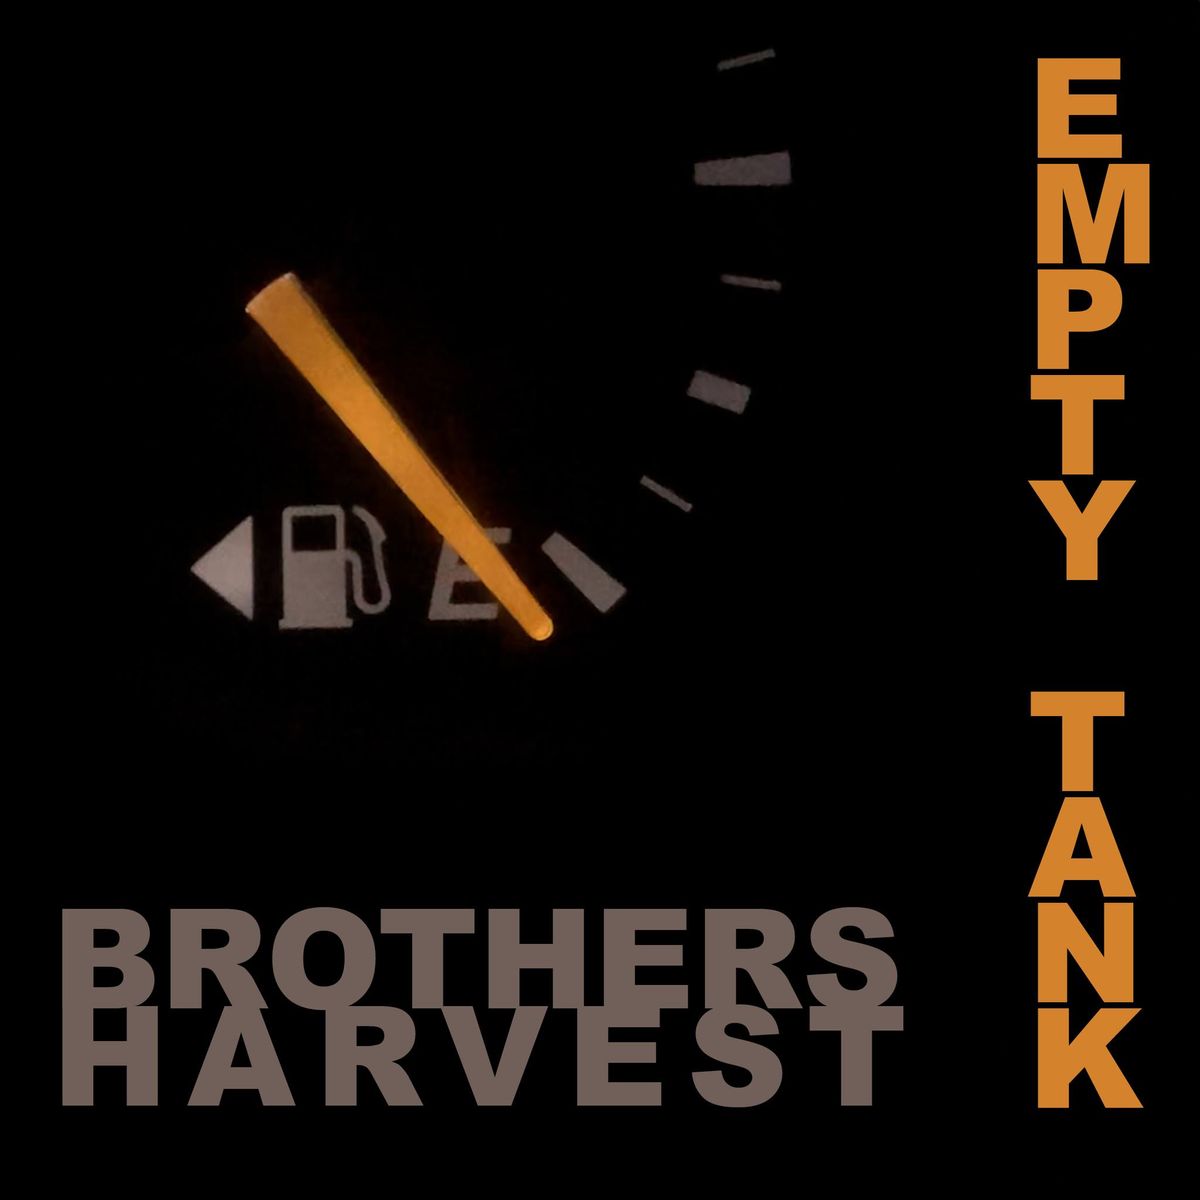 BROTHERS HARVEST "EMPTY TANK" Single Launch w\/BIN NIGHT BANDITS